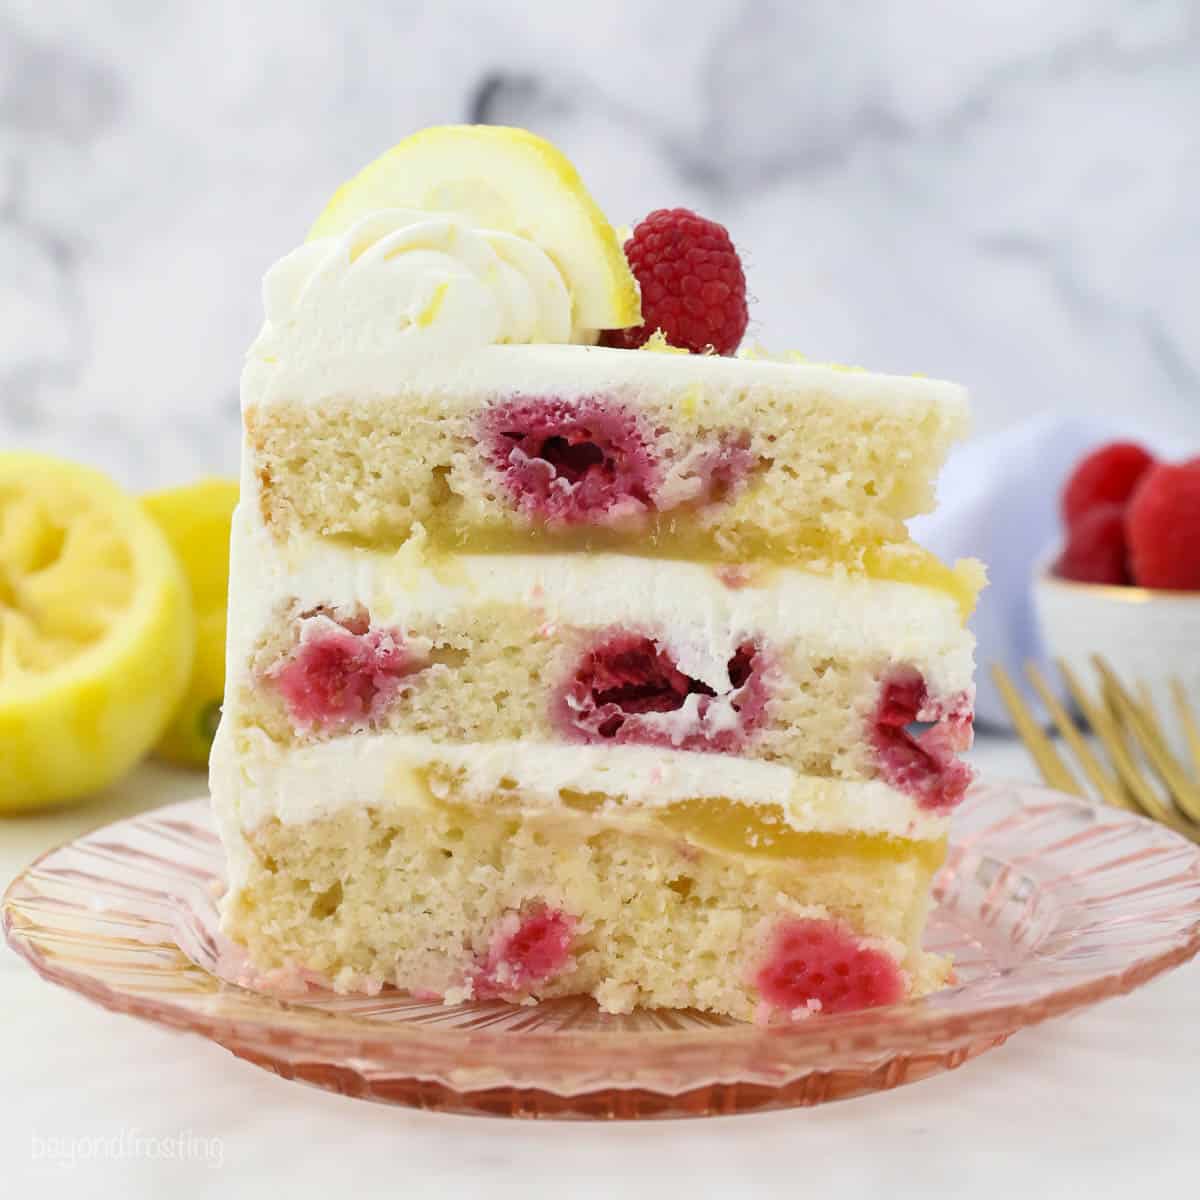 Raspberry Lemon Cake Recipe: How to Make It